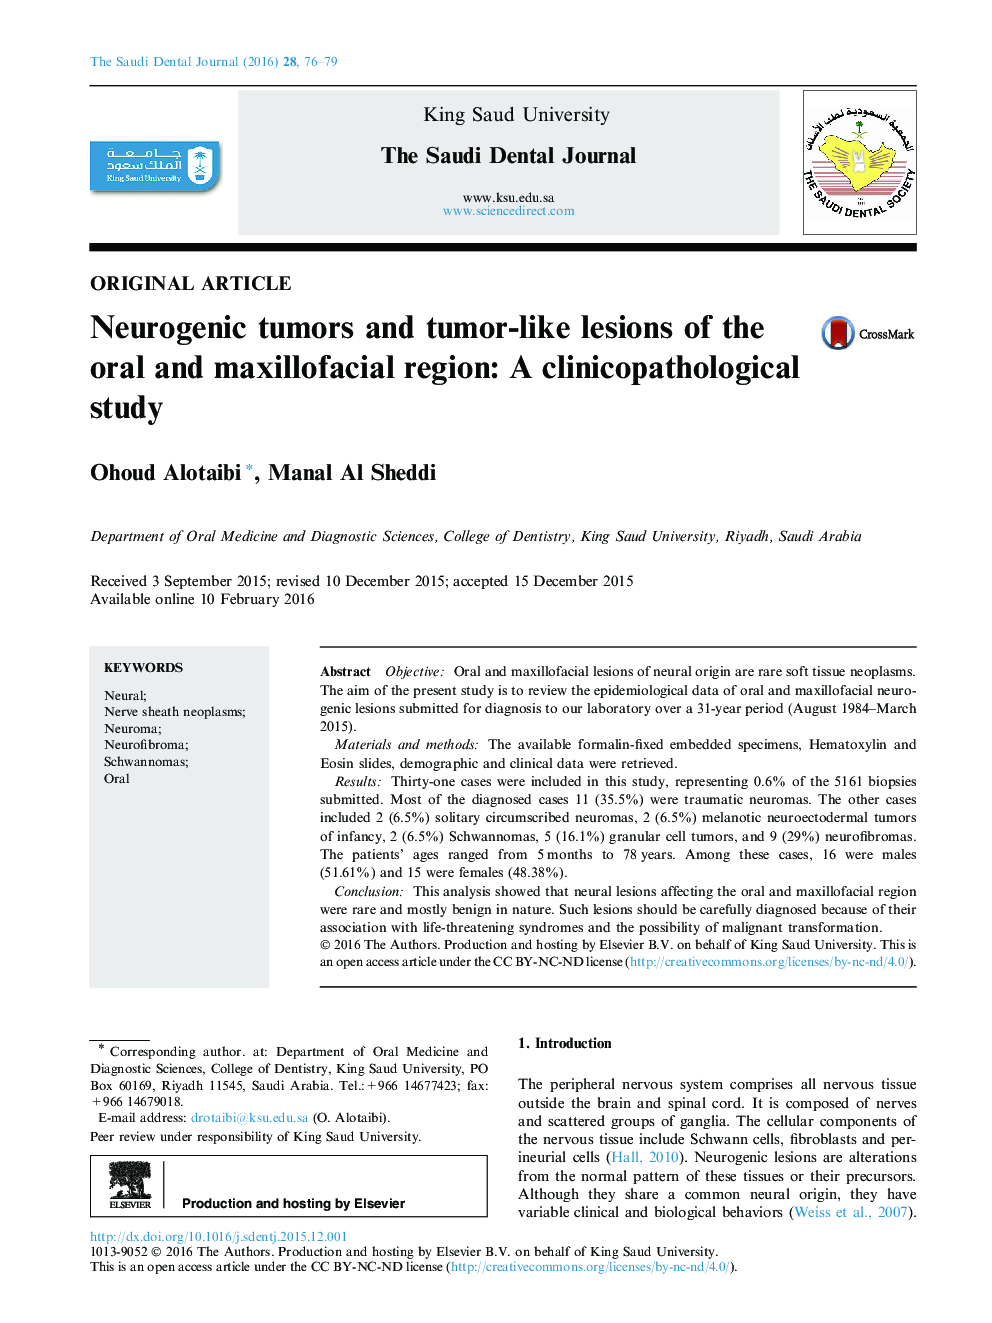 Neurogenic tumors and tumor-like lesions of the oral and maxillofacial region: A clinicopathological study 